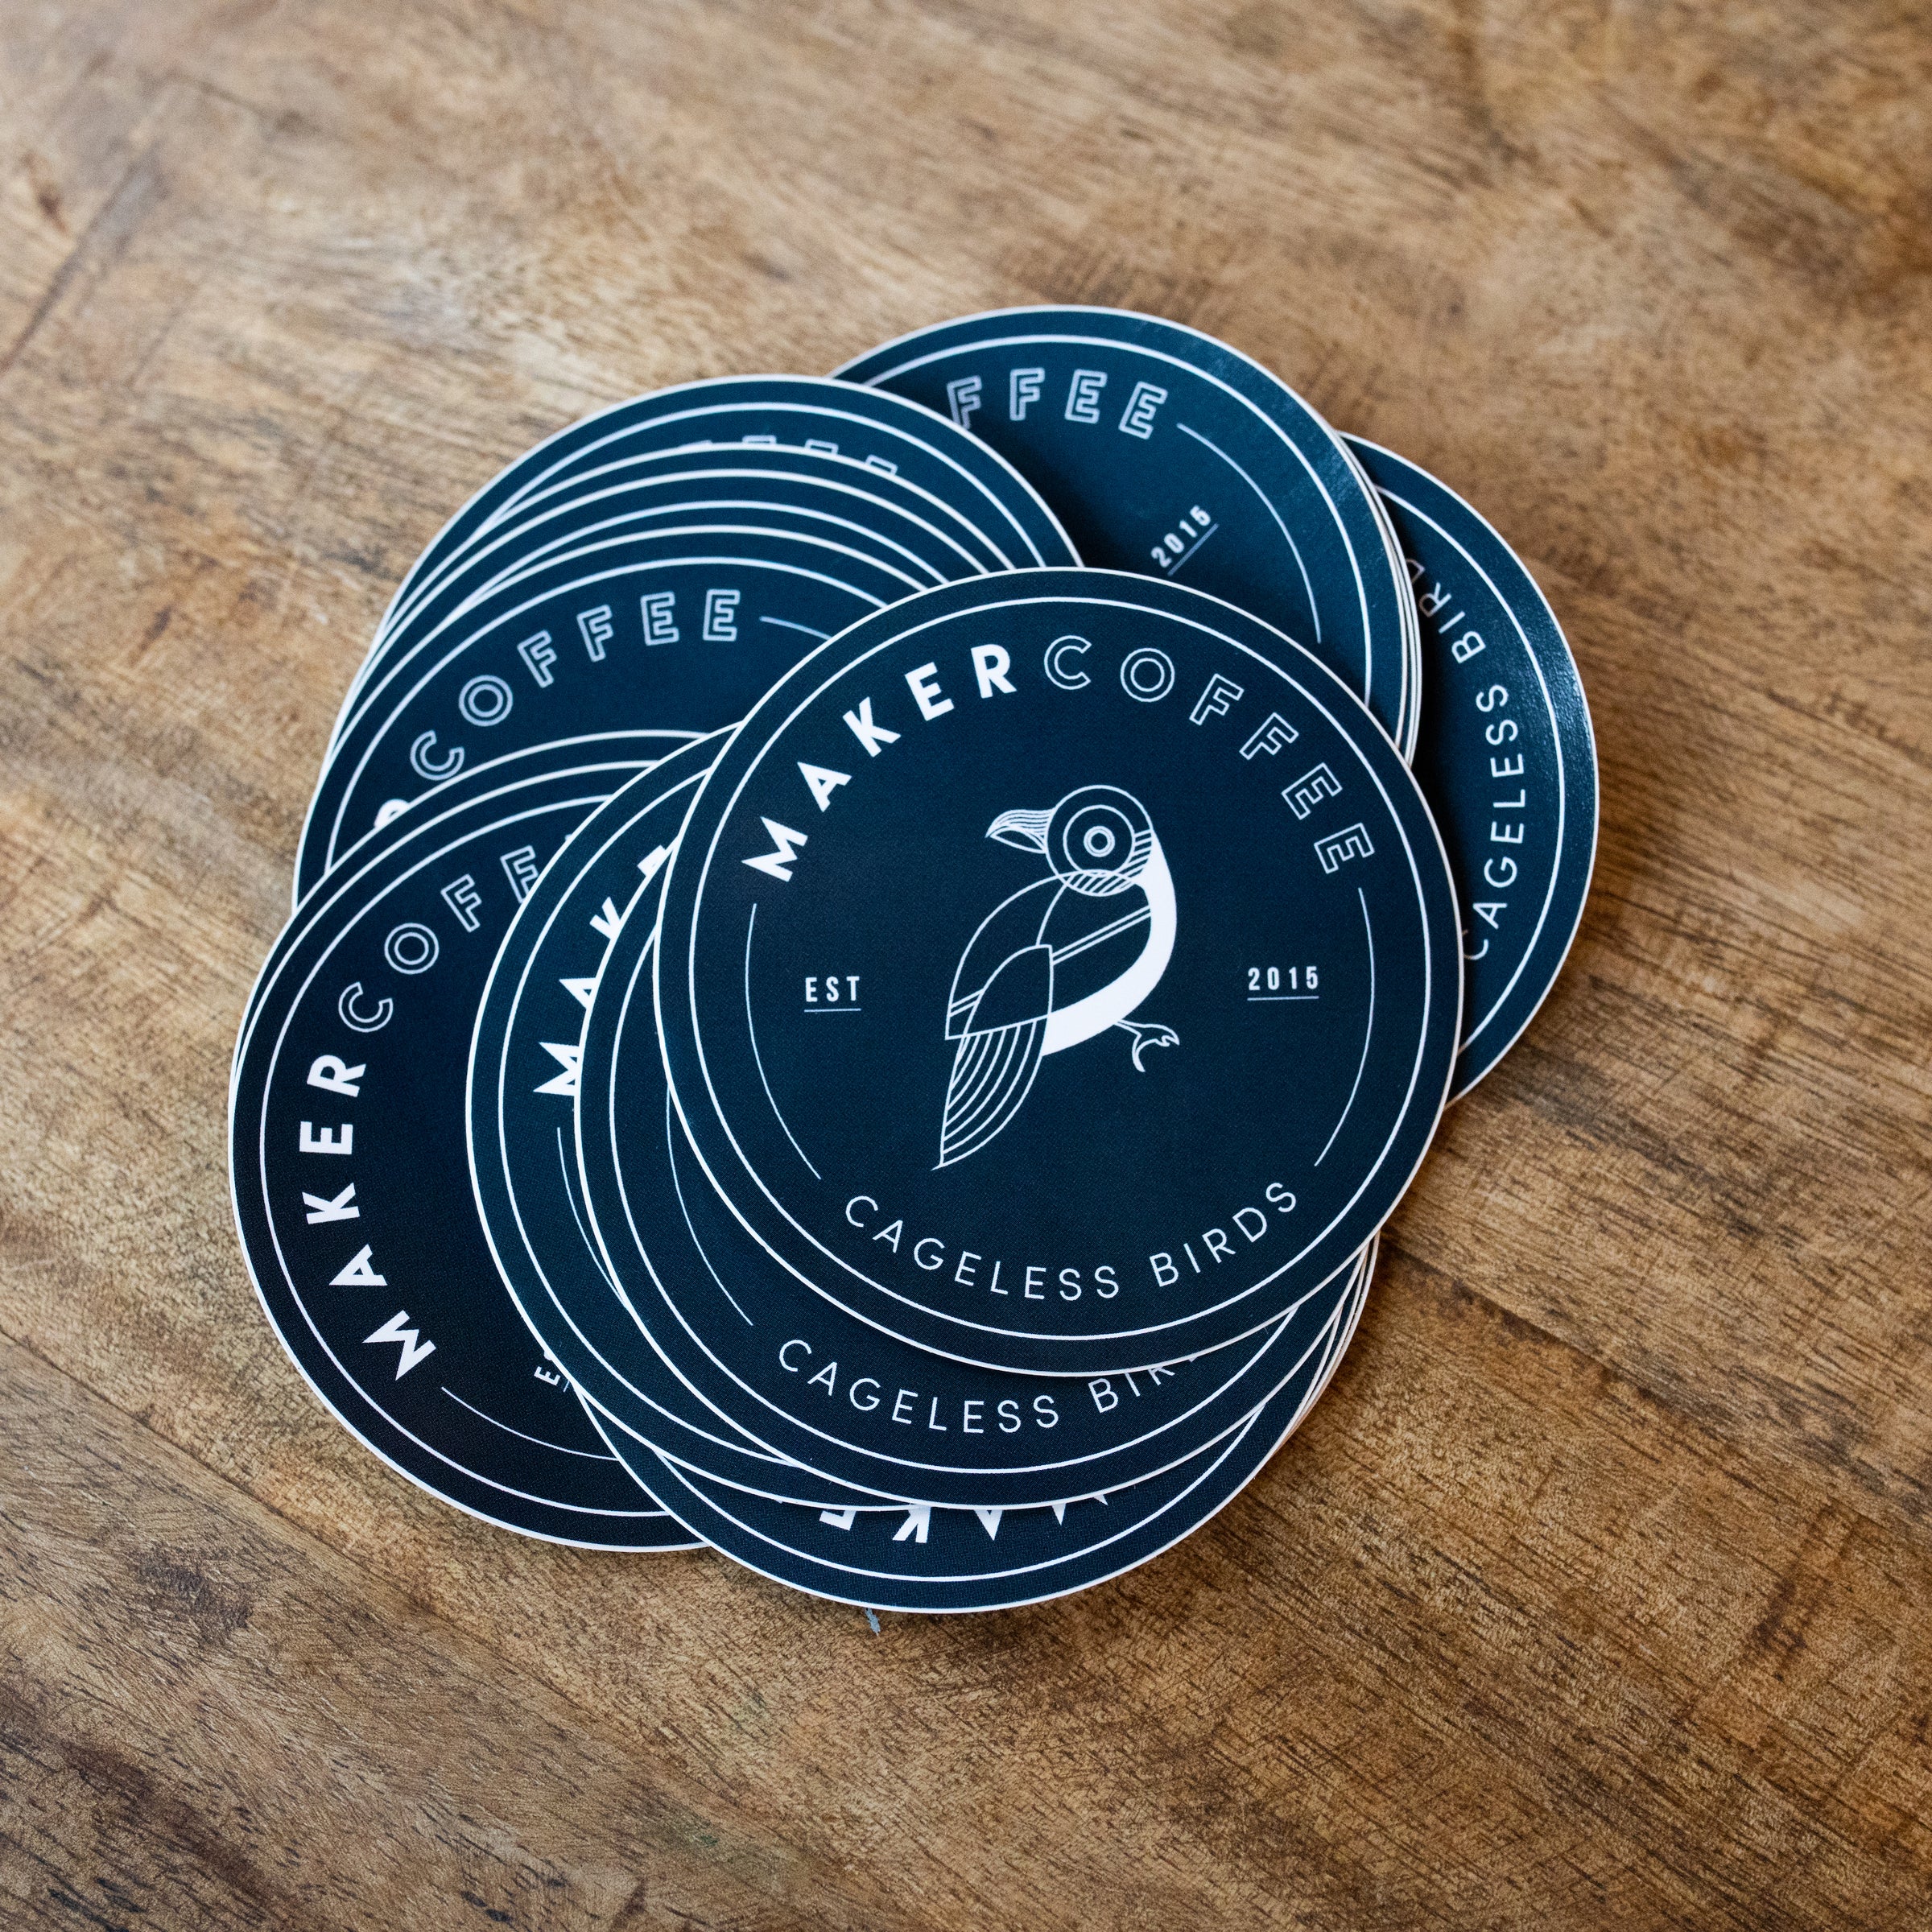 Maker Coffee Logo Sticker – Cageless Birds